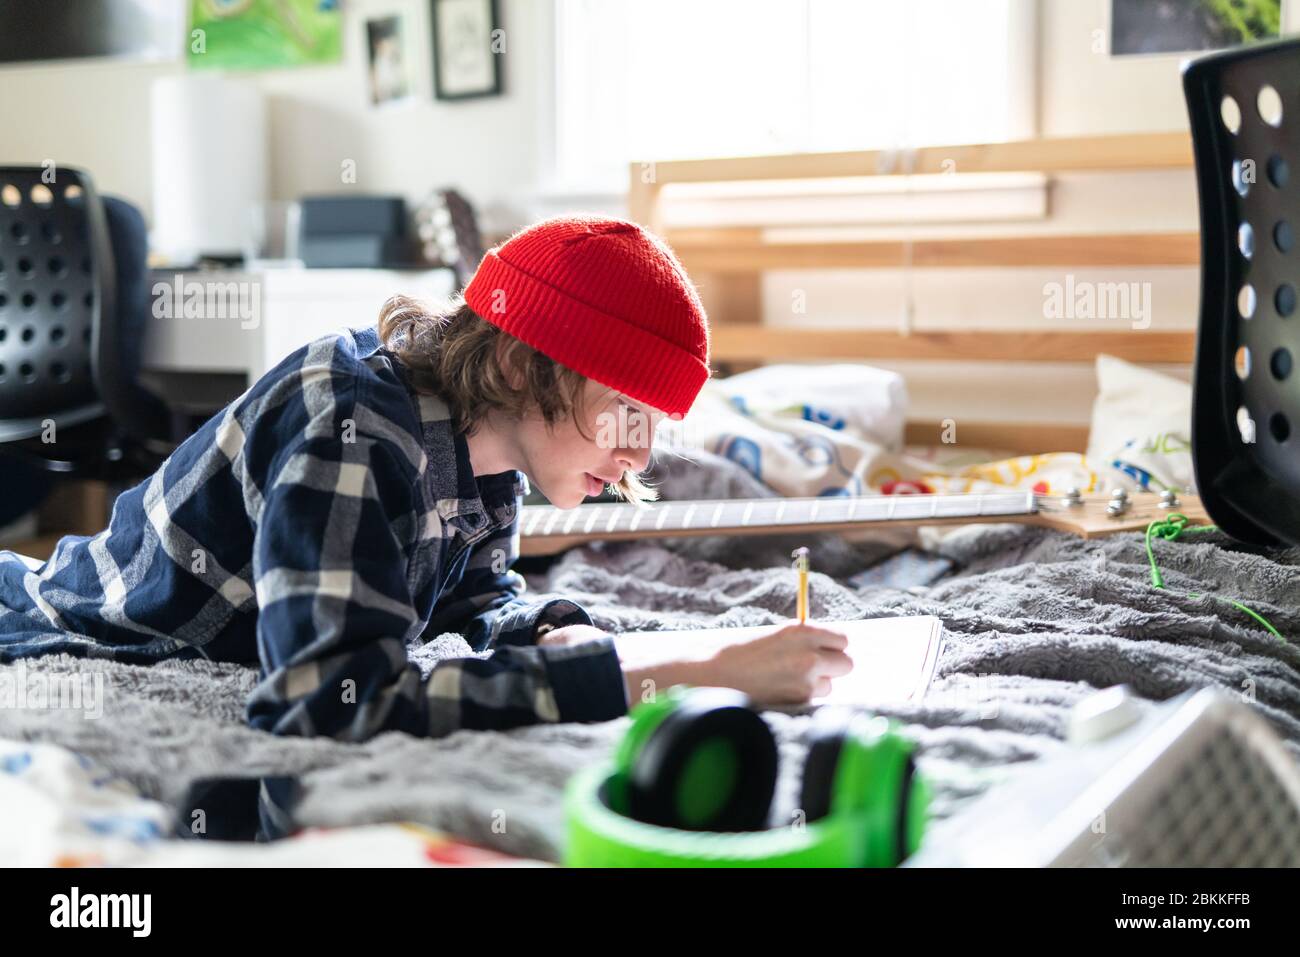 Teenage boy working on homework in bedroom surrounded by belongings Stock Photo